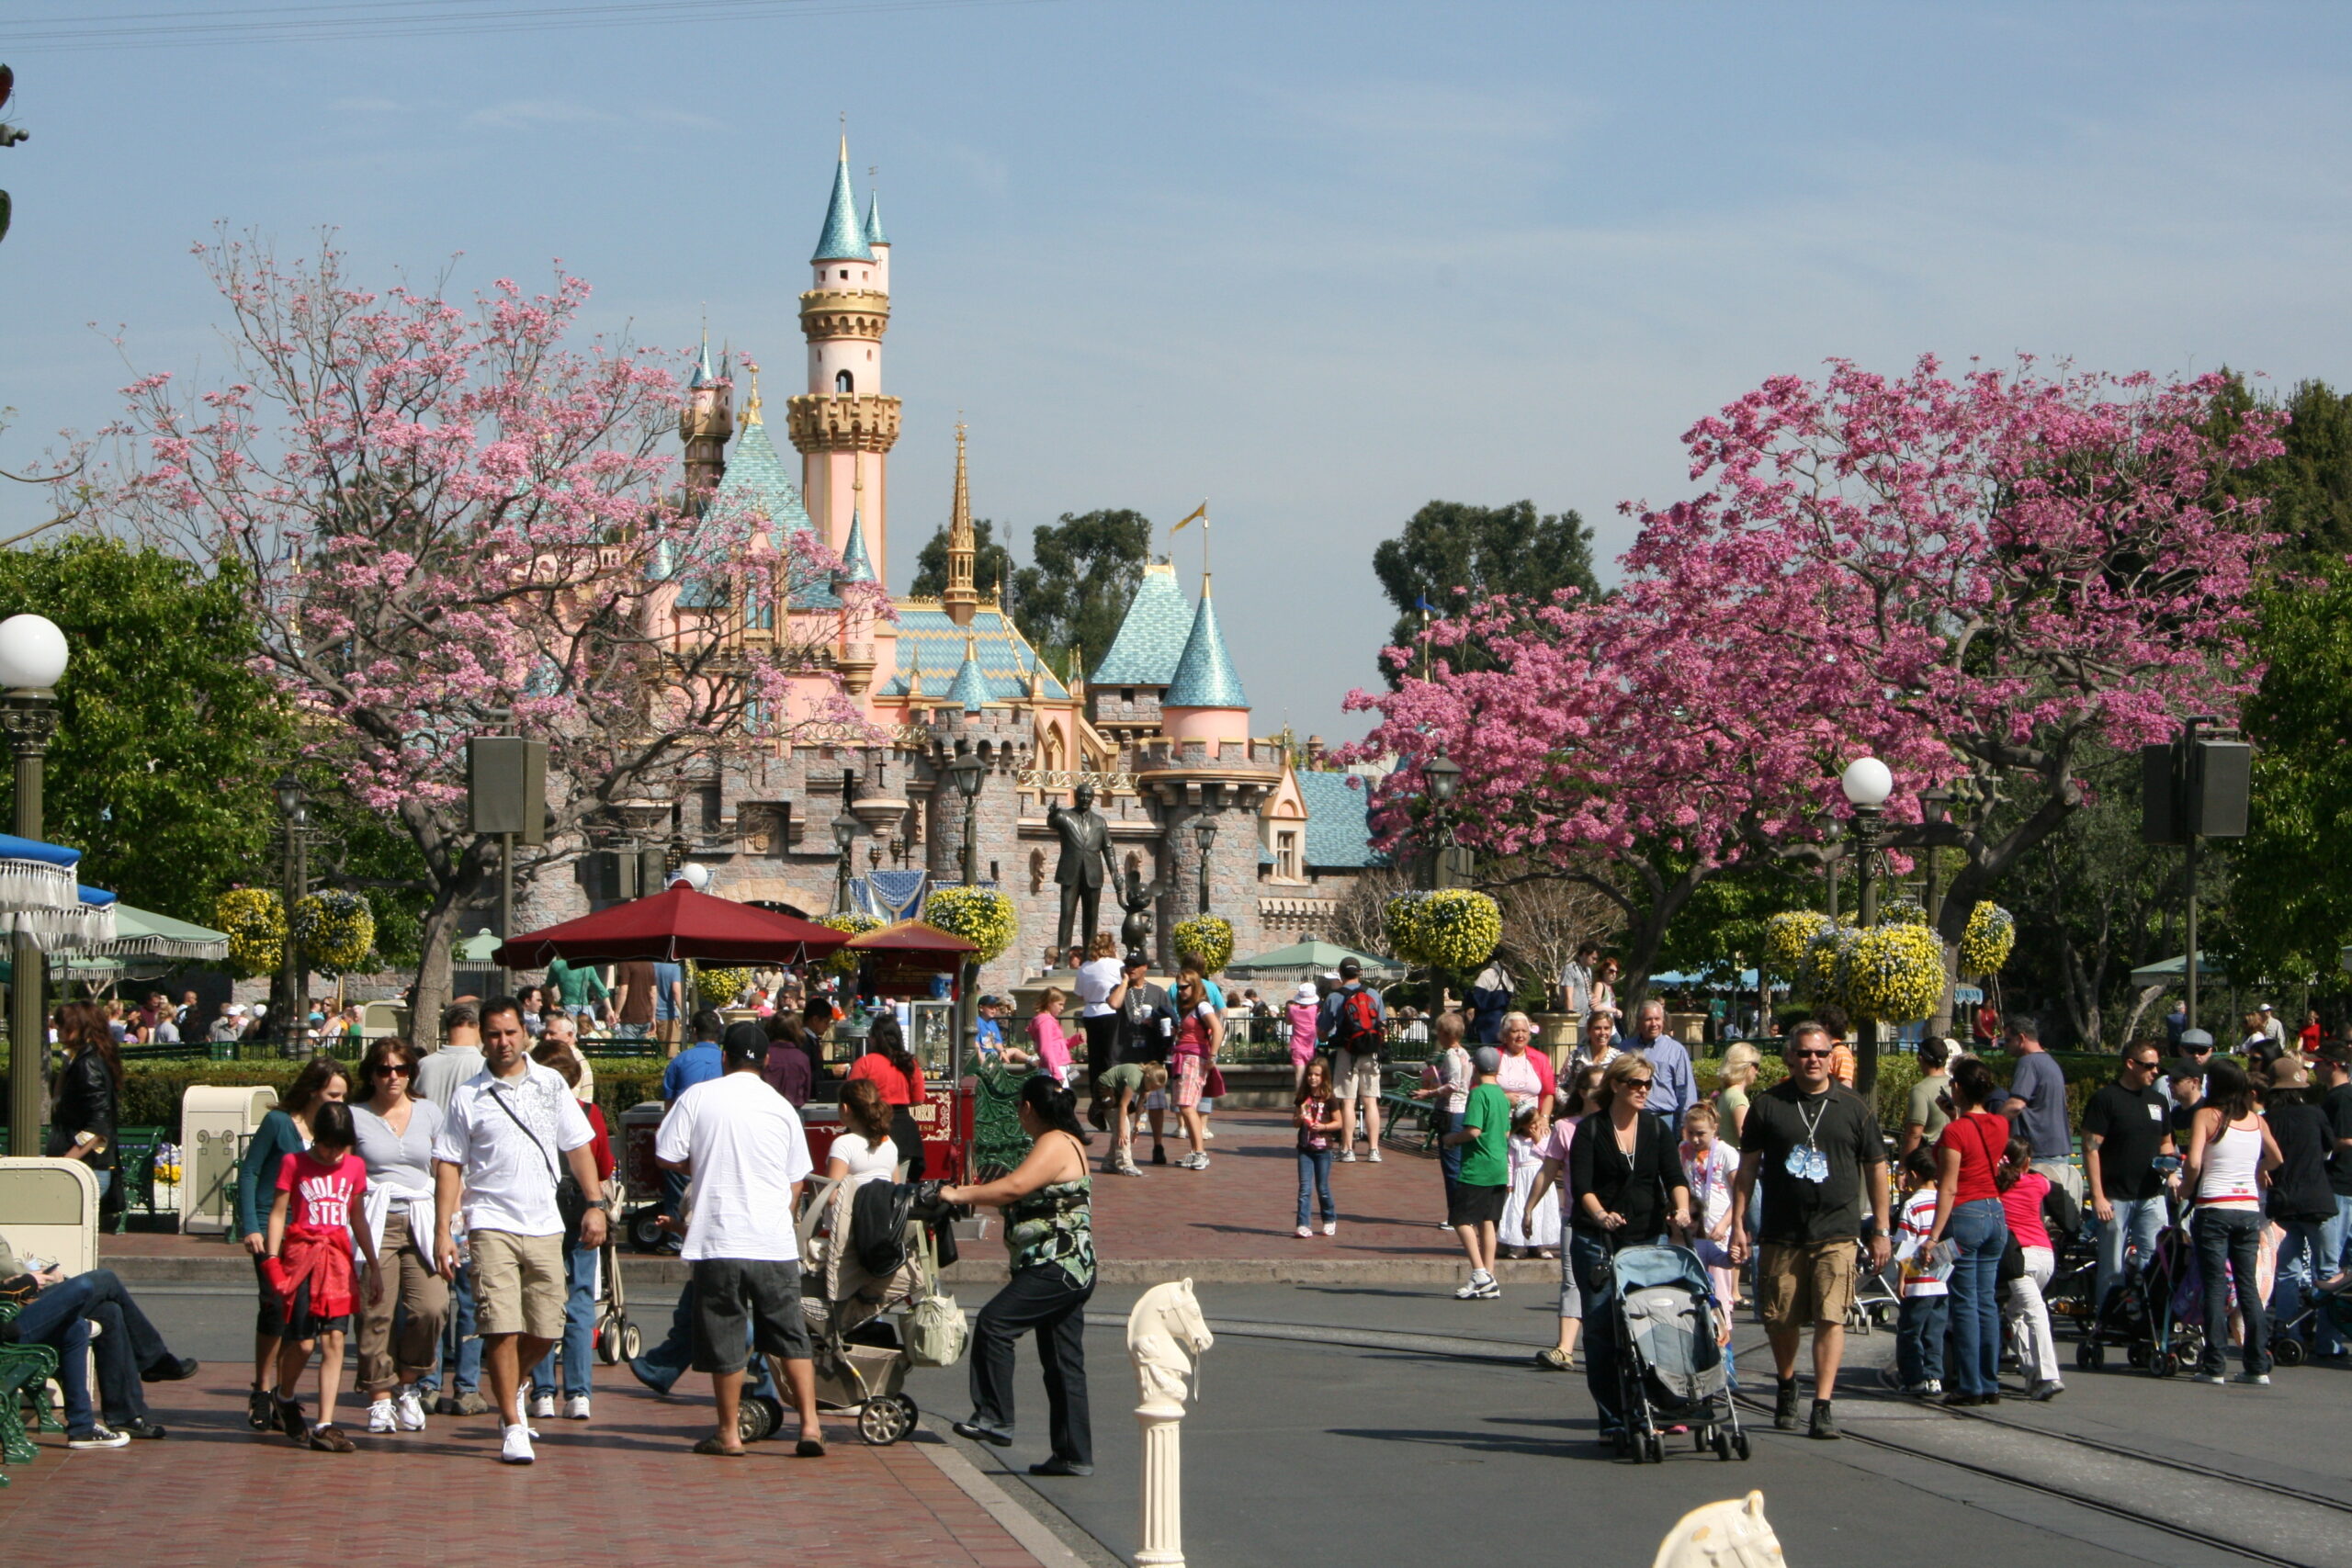 Disneyland's Sleeping Beauty Castle is based on Germany's Neuschwanstein Castle, built by King Ludwig II.